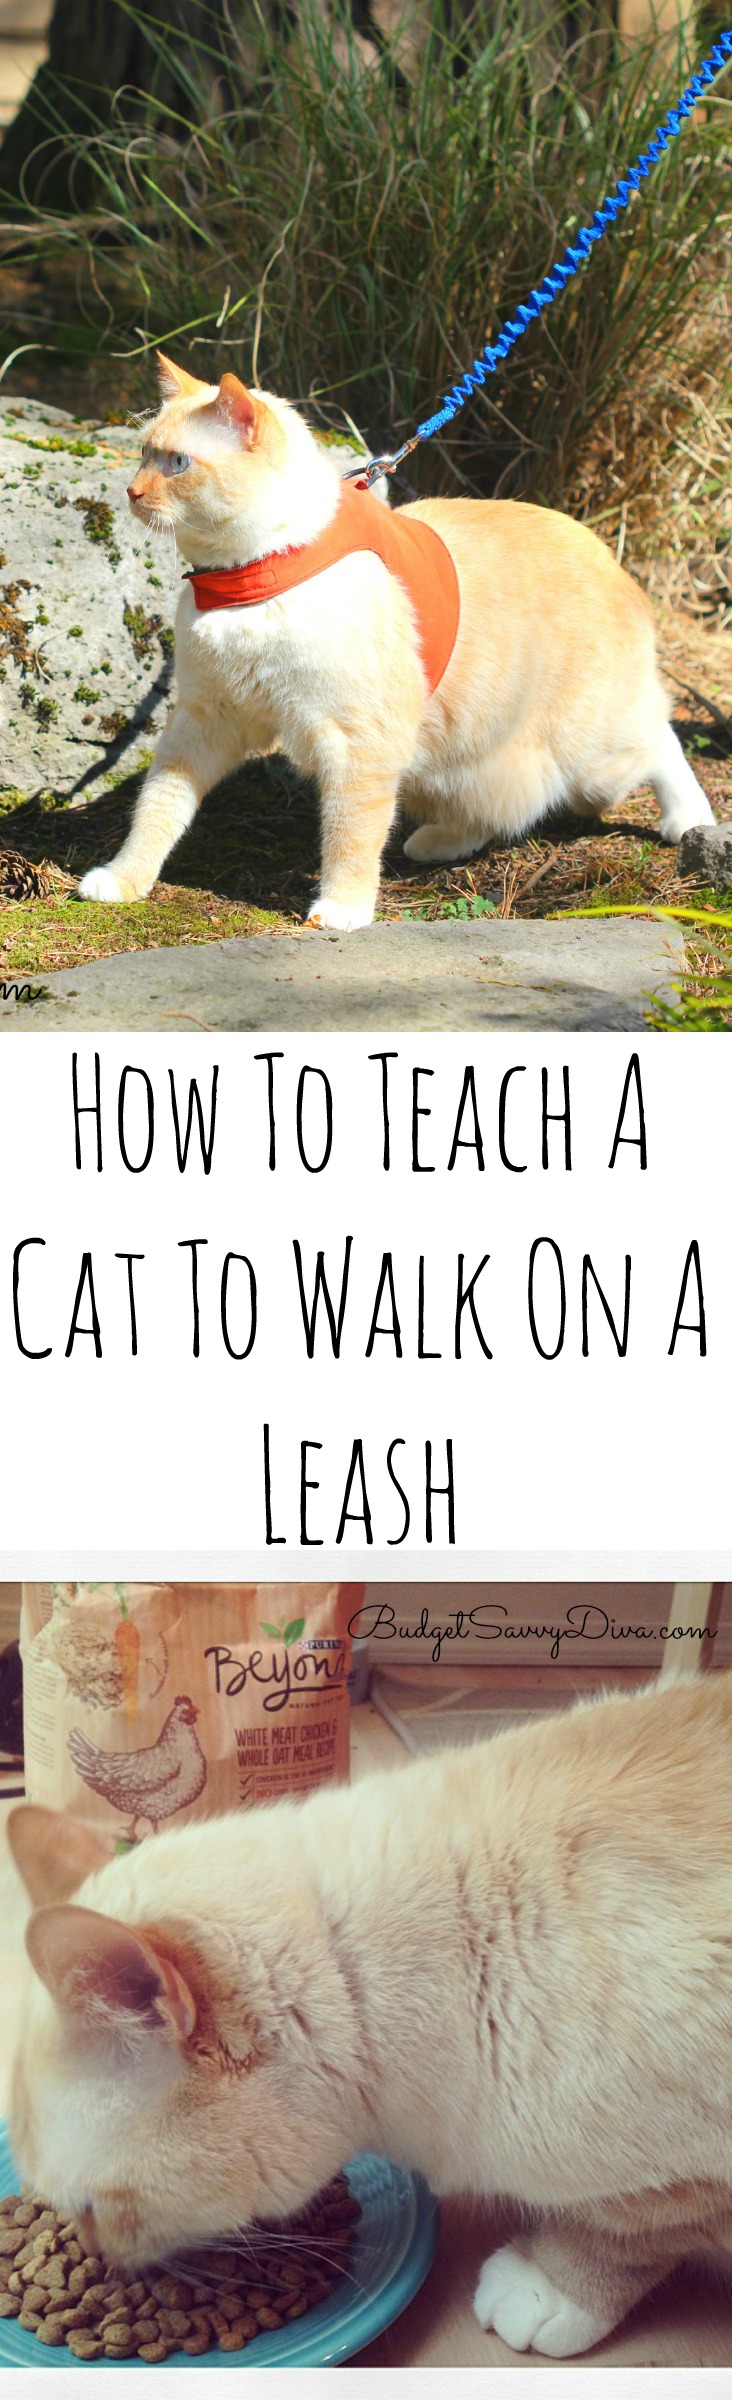 How To Walk A Cat On A Leash #BeyondSummer